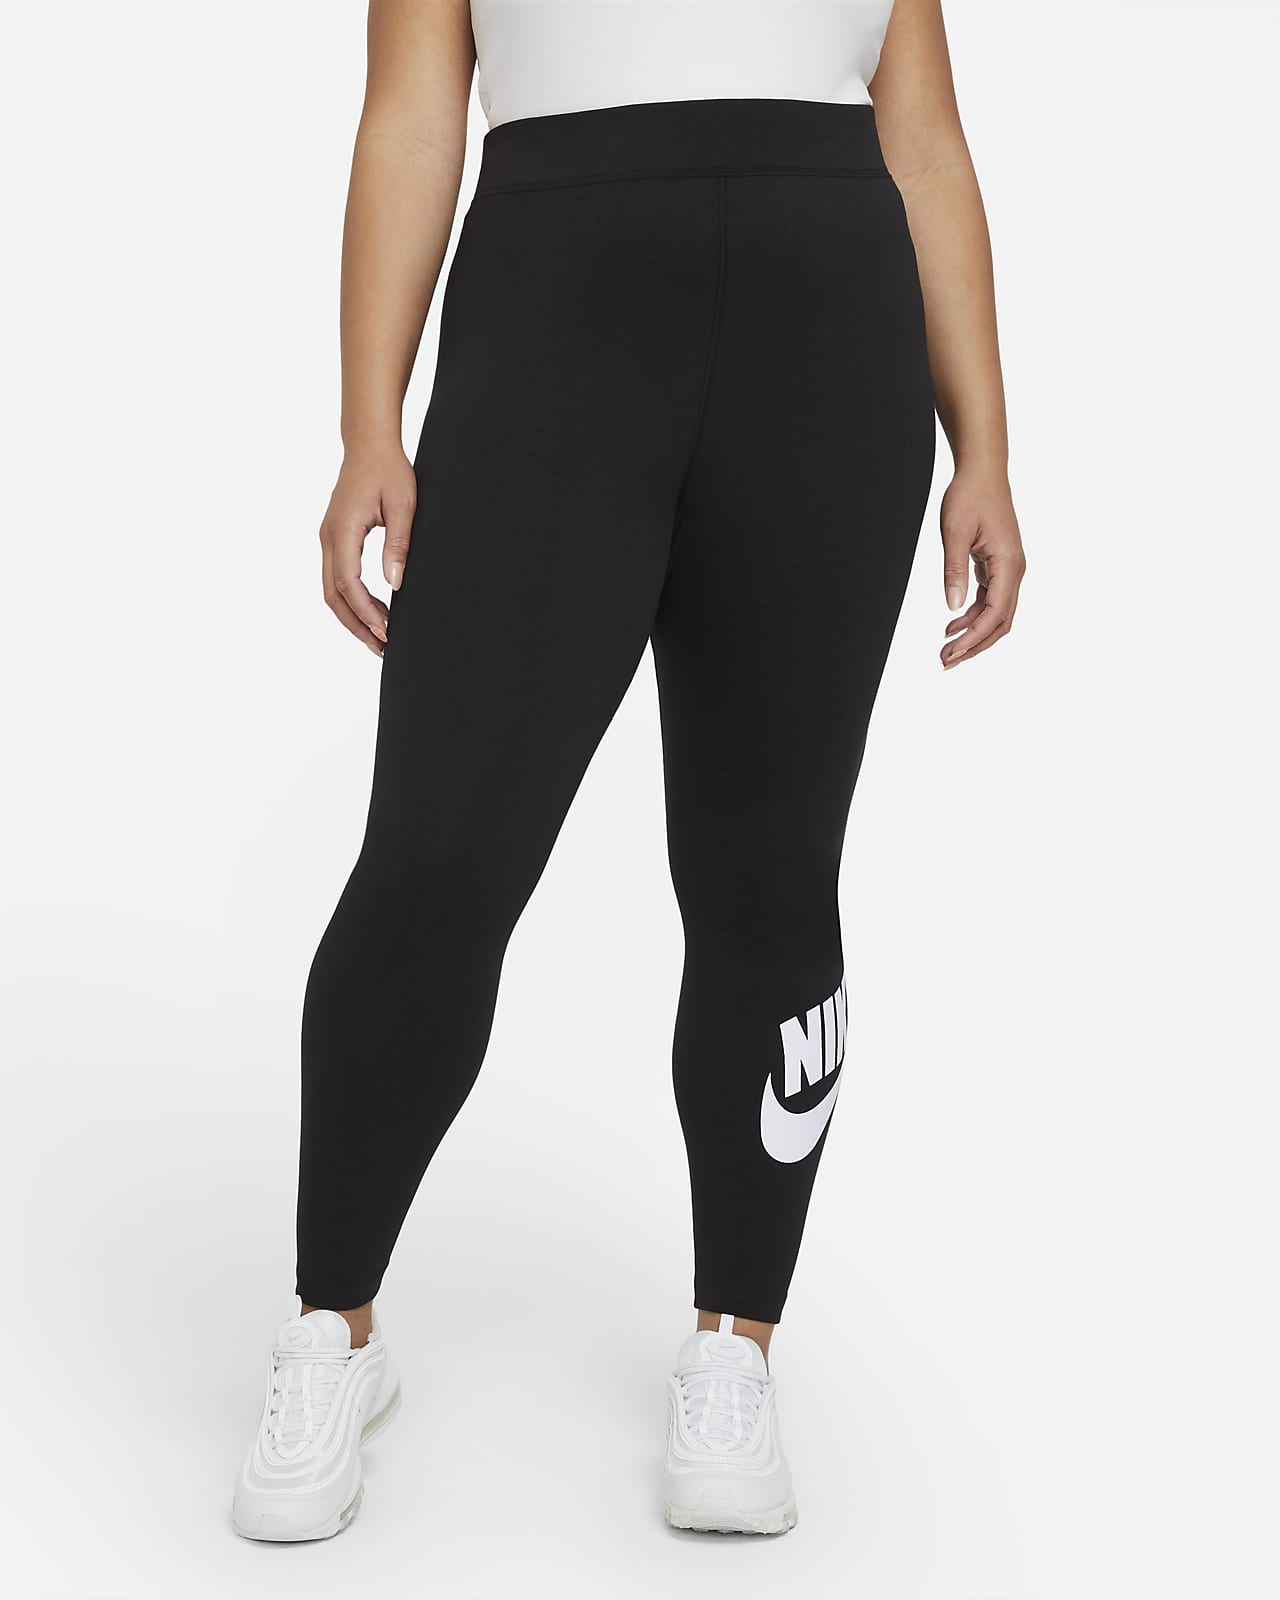 Legging taille haute Nike Sportswear Essential pour Femme (Grande taille)